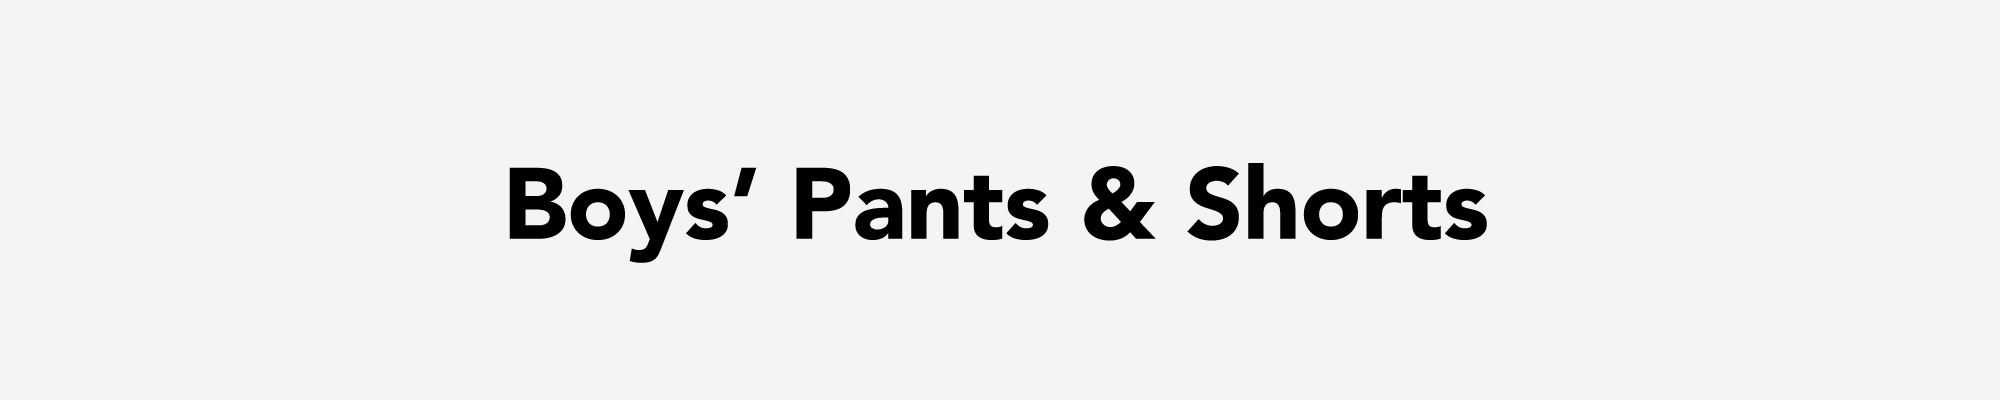 Boys' Pants & Shorts